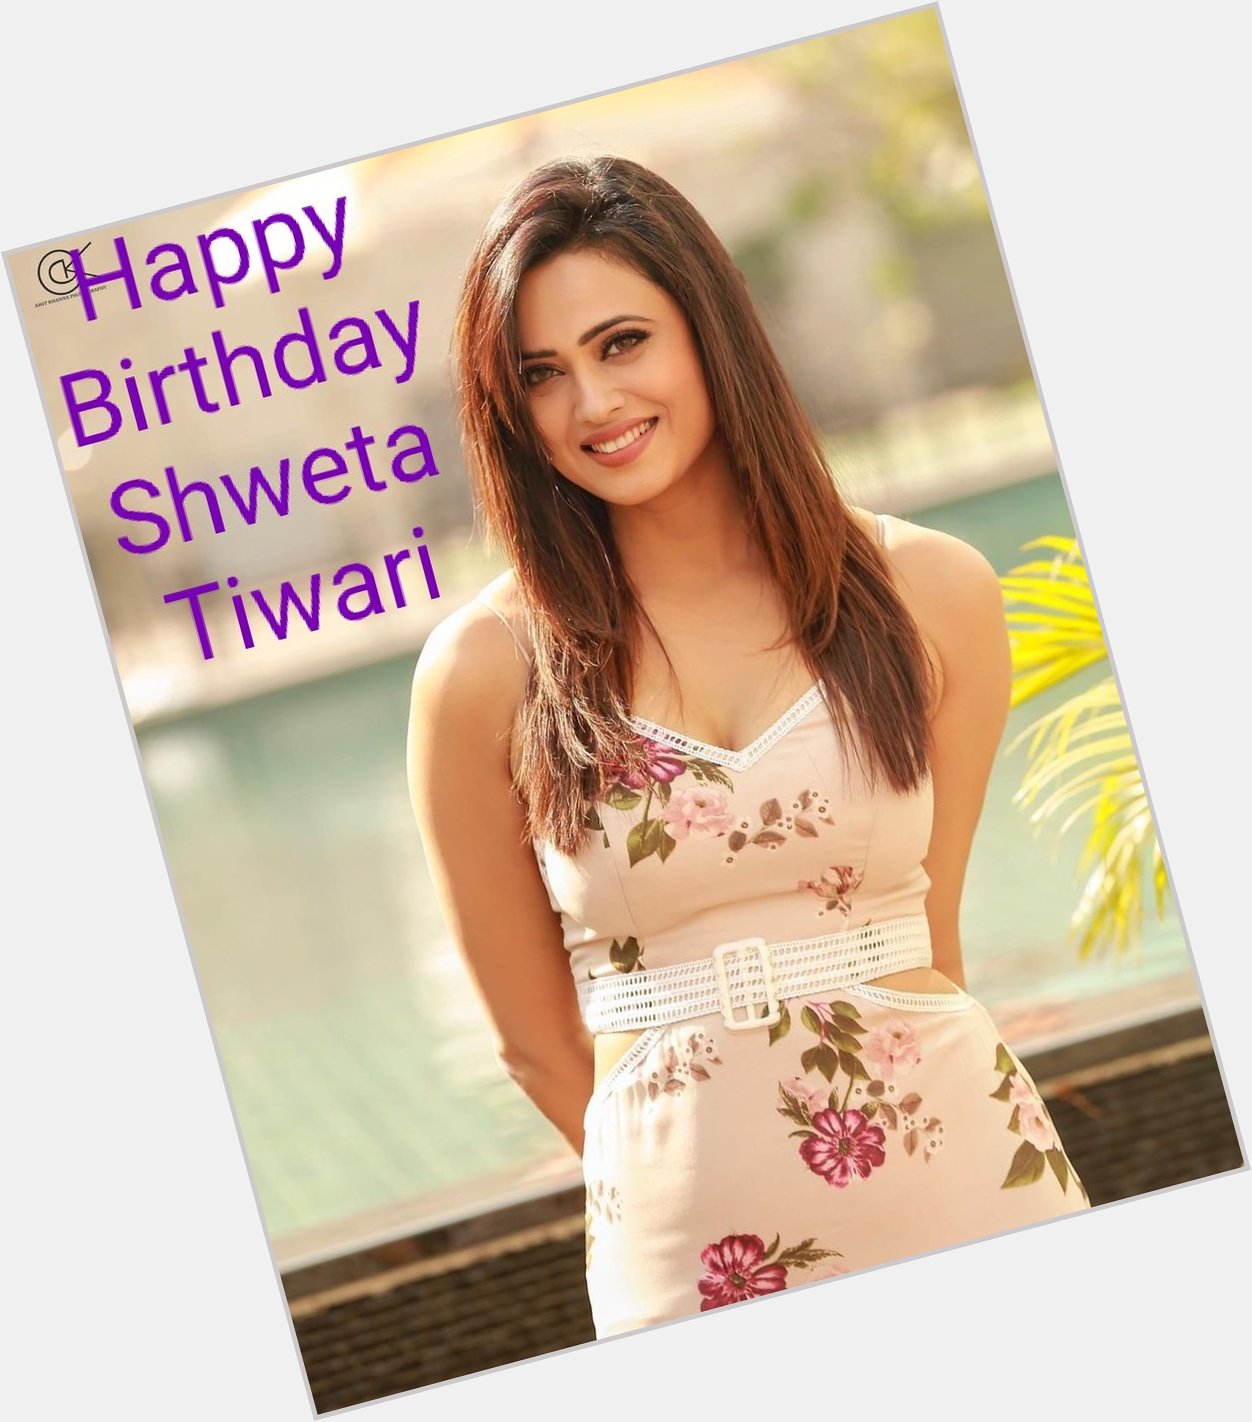 Happy Birthday To You Shweta Tiwari . 